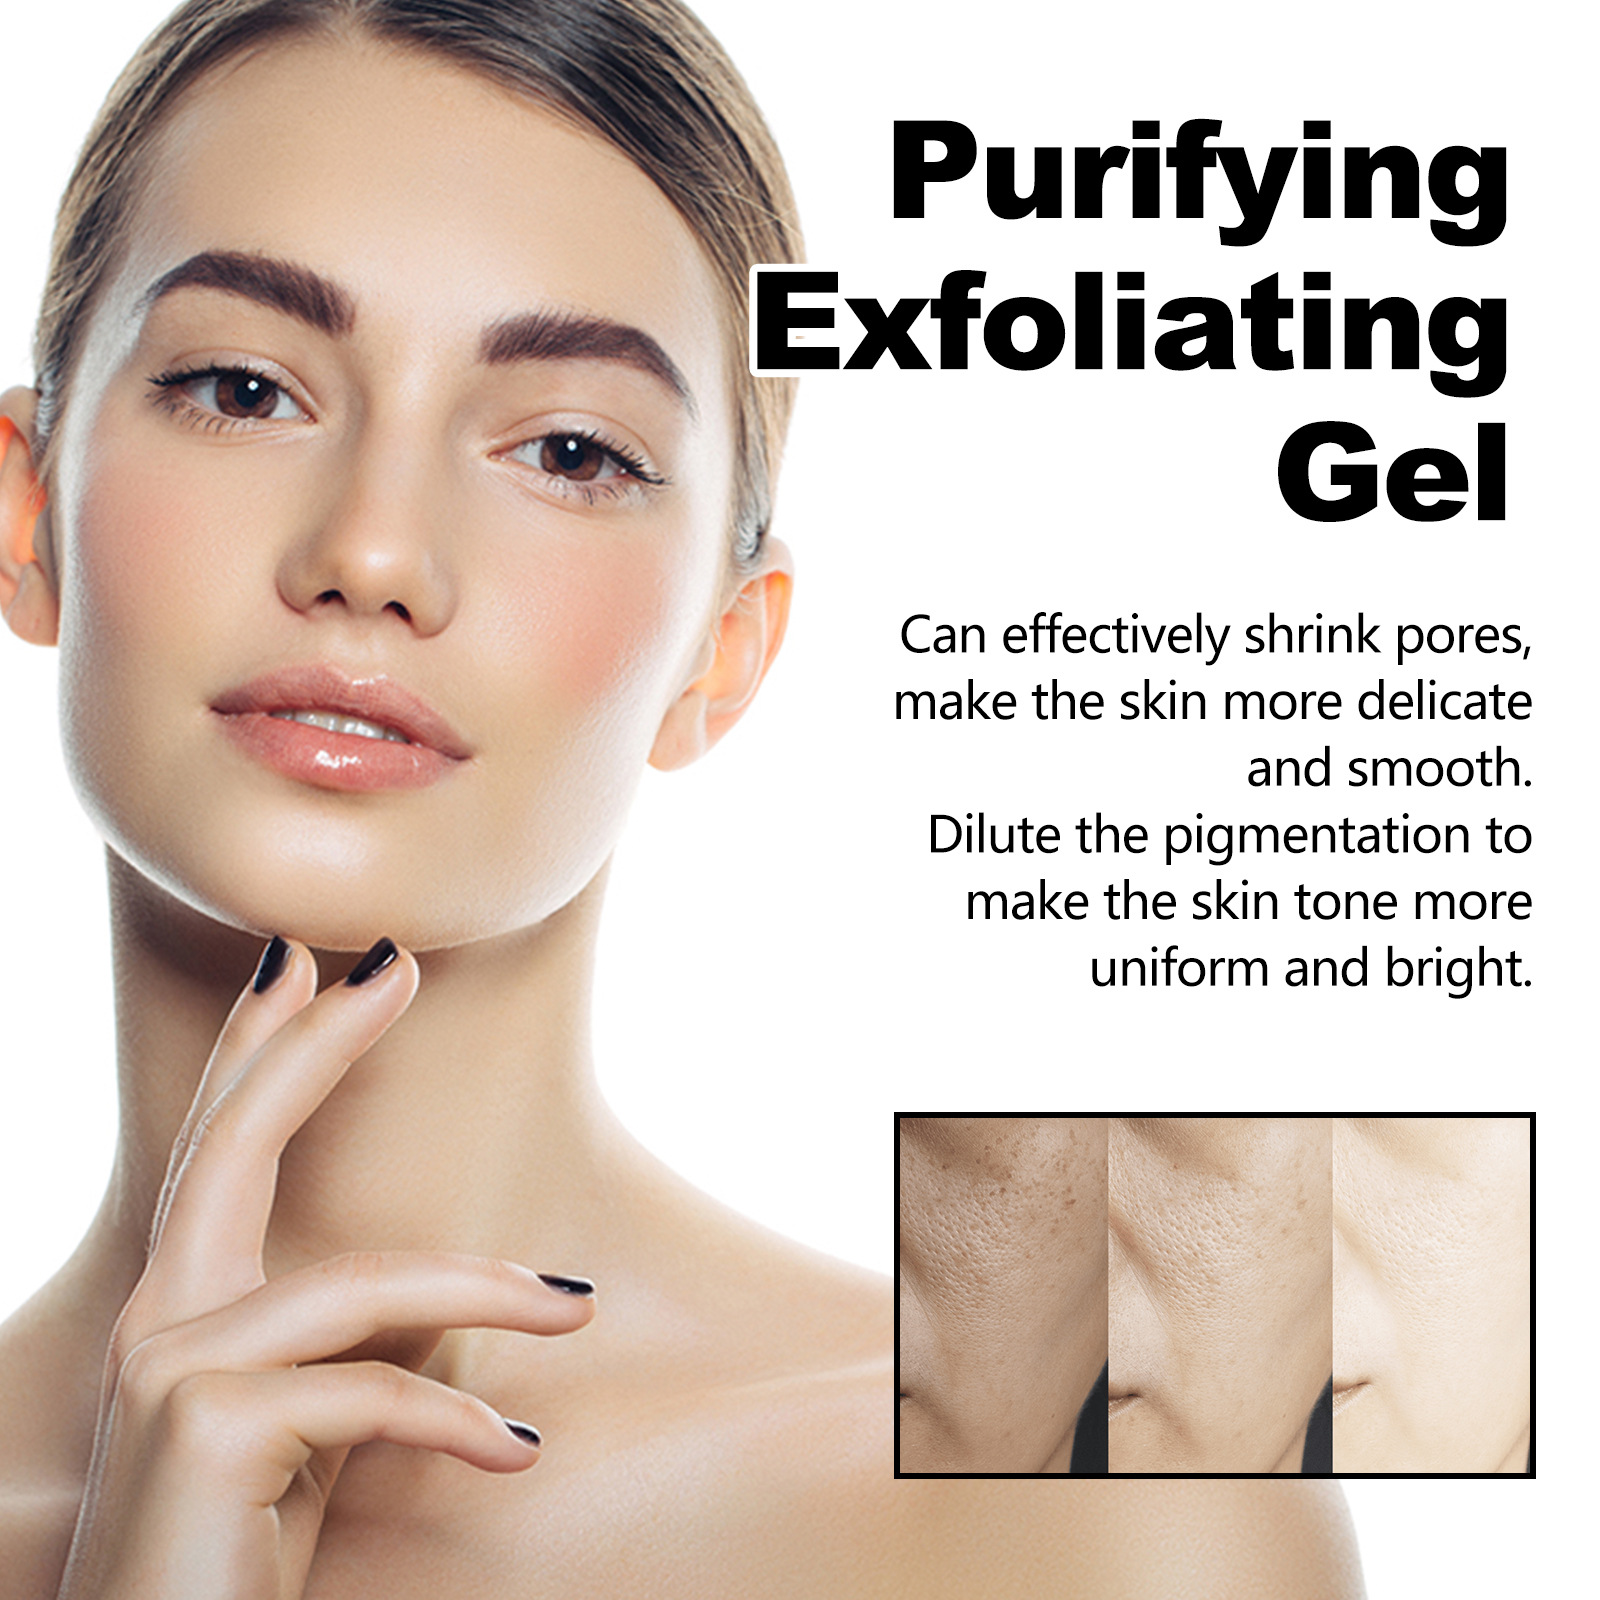 West & Month Deep Exfoliating Gel Whitening Skin Delicate Brightening Skin Cleansing Cutin Firming Pores